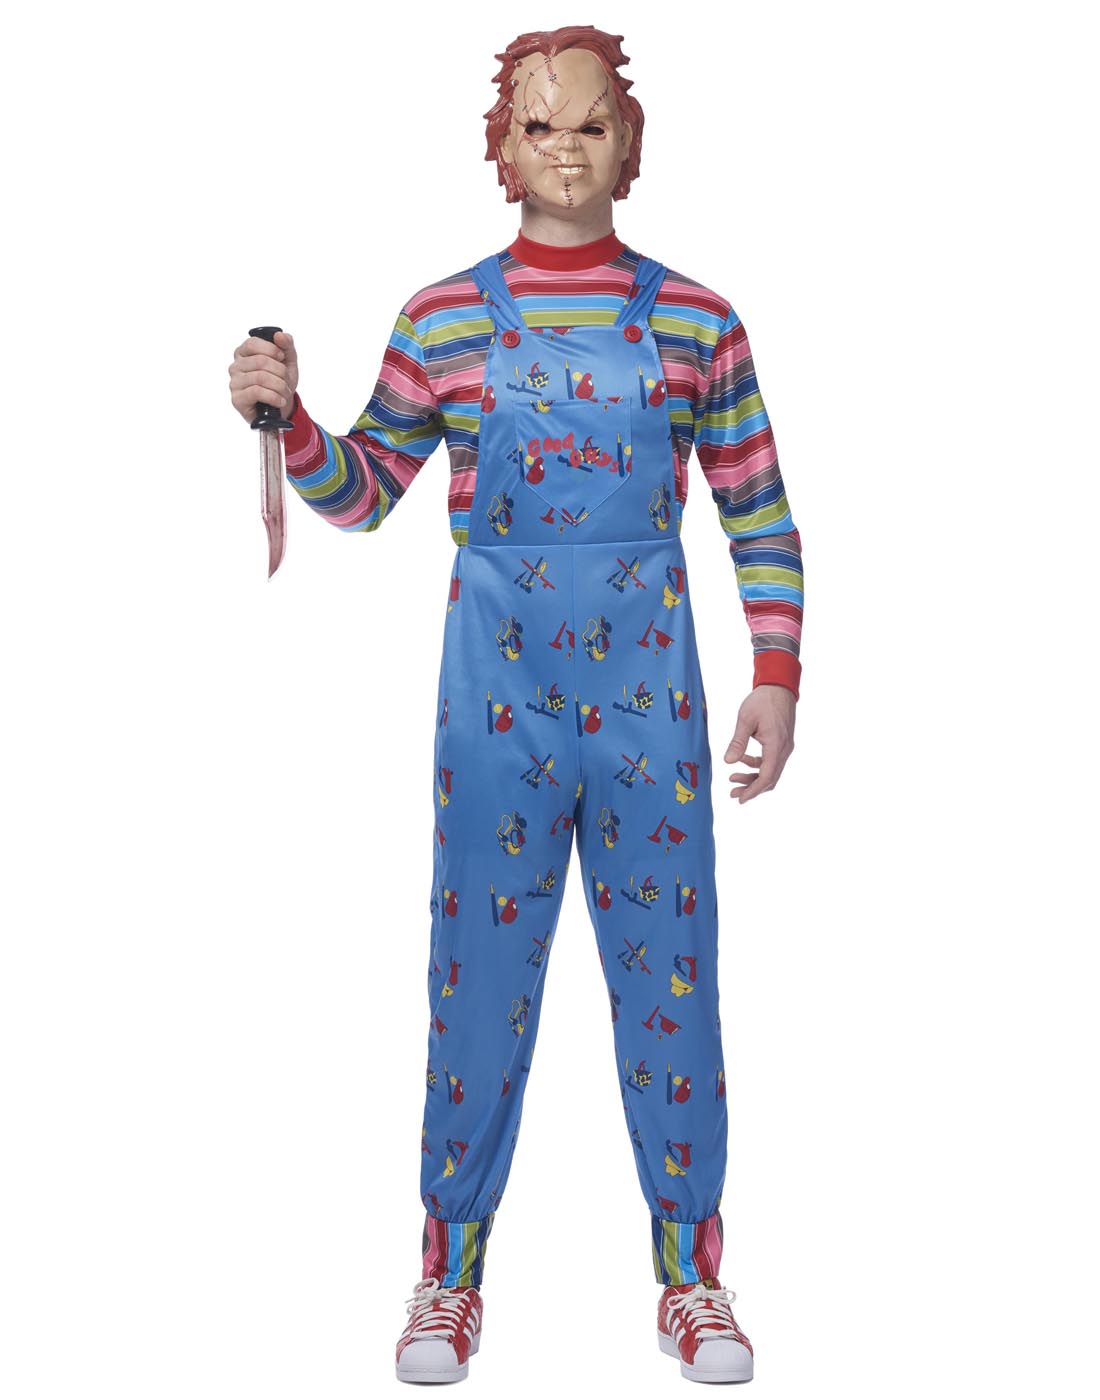 Chucky Licensed Men's Halloween Fancy-Dress Costume for Adult, Standard - image 2 of 2